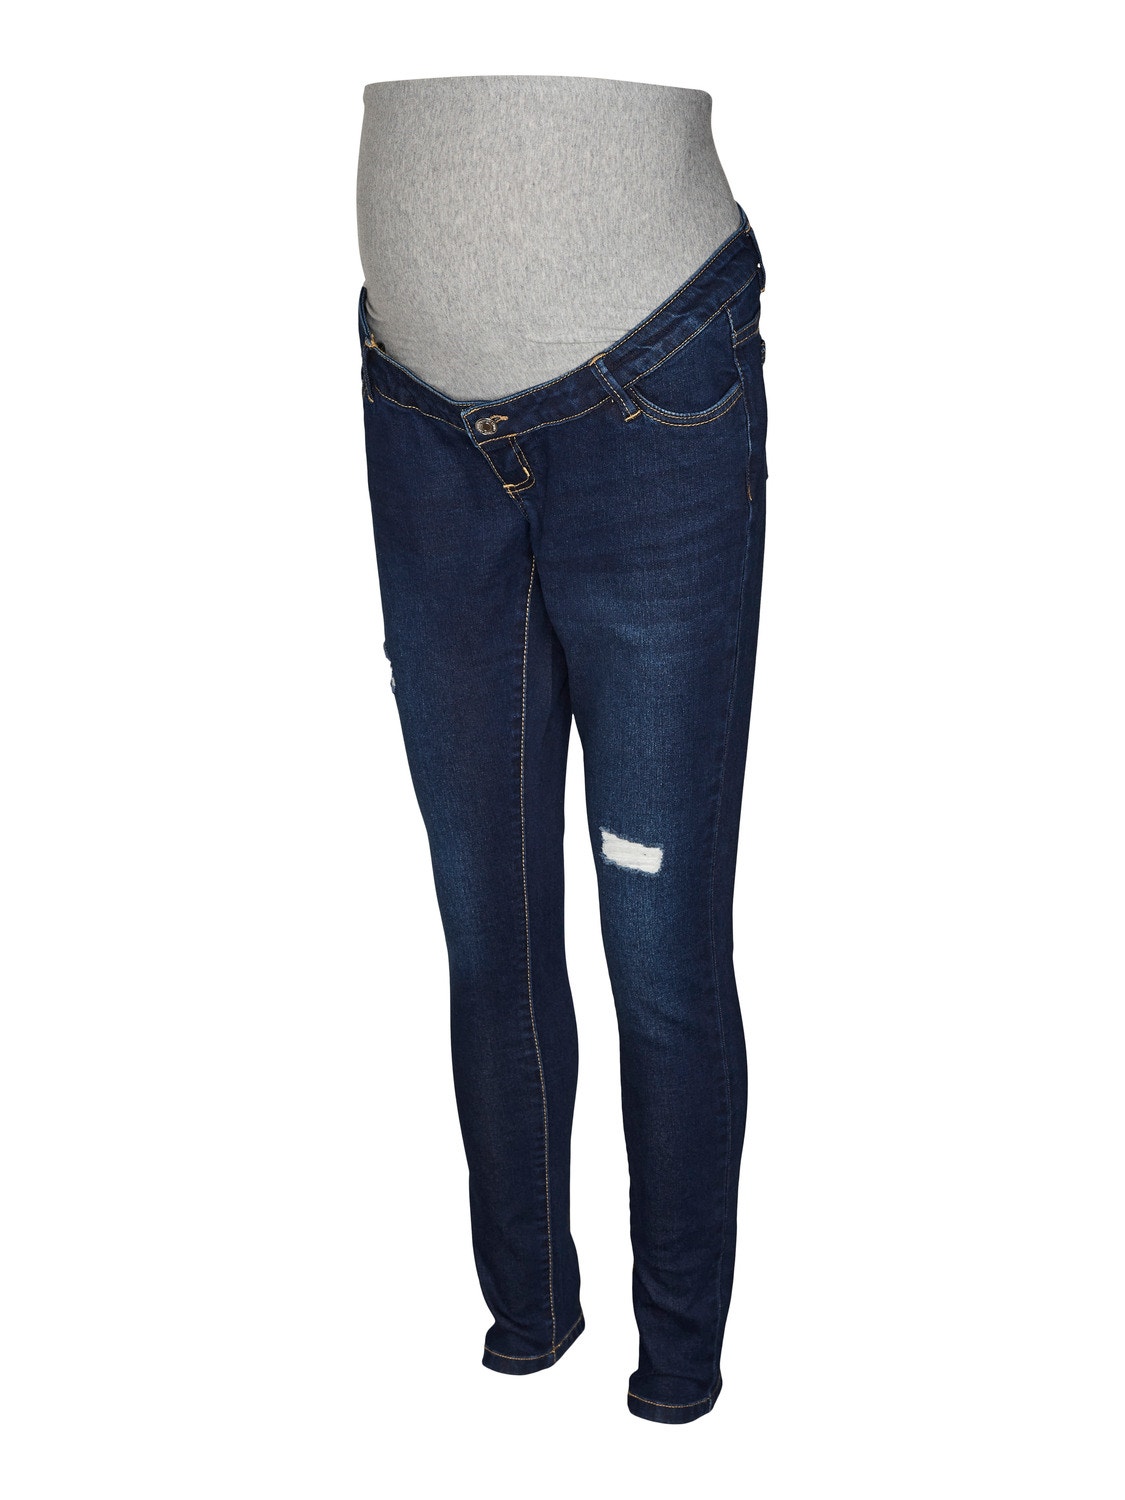 MAMA.LICIOUS Jeans Skinny Fit -Dark Blue Denim - 20019089